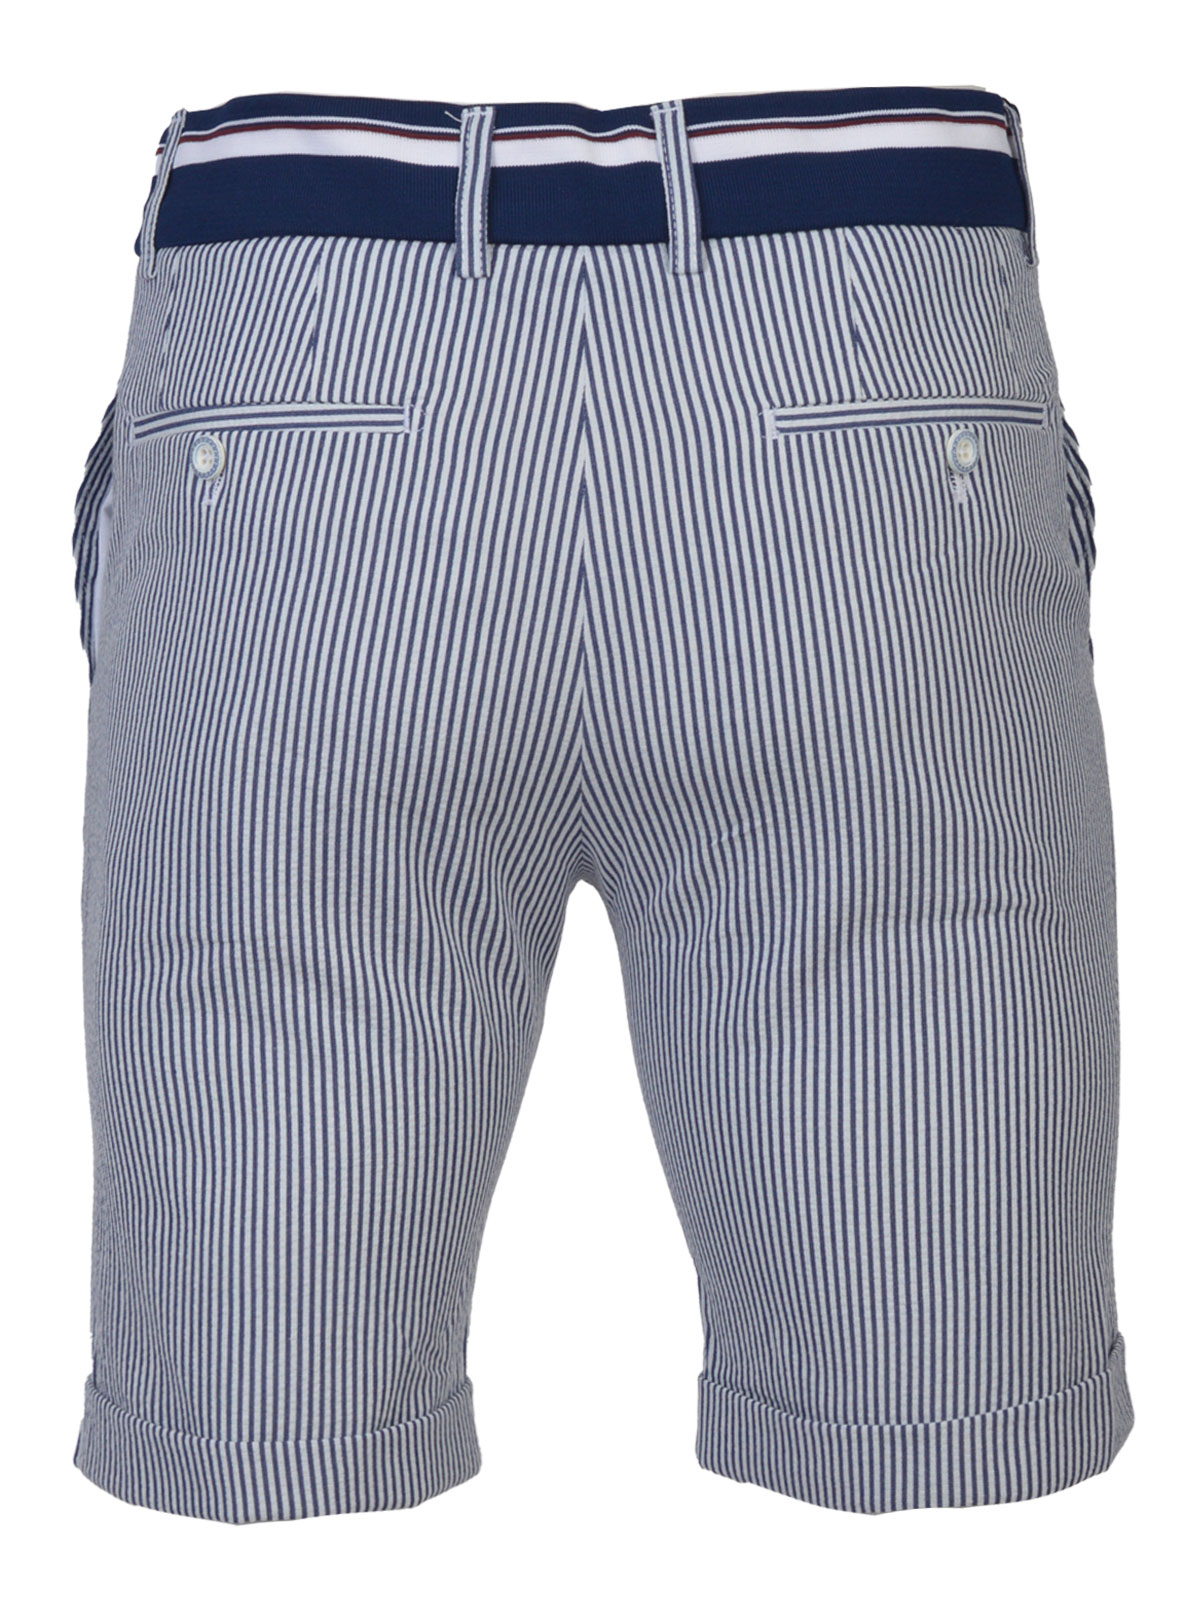 Bermuda shorts in white on a blue stripe - 67078 € 38.24 img2